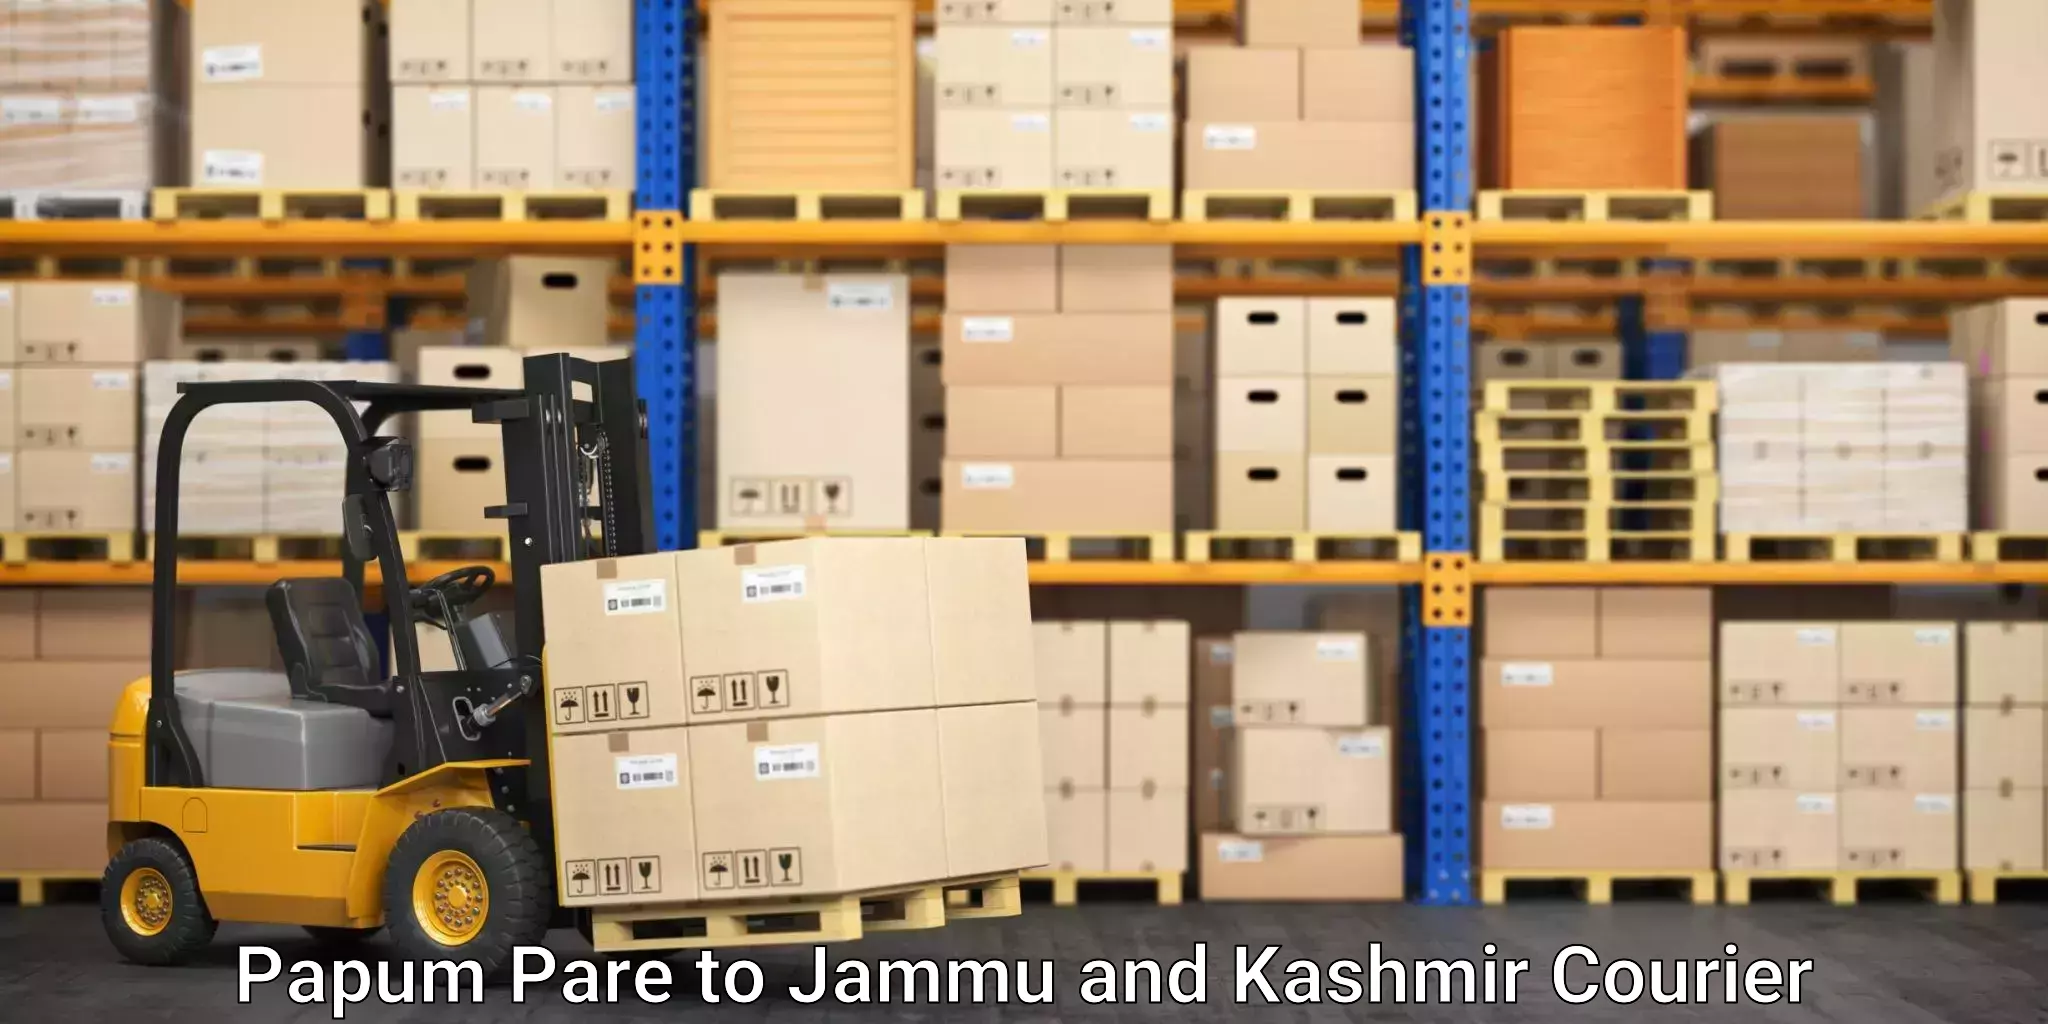 State-of-the-art courier technology Papum Pare to Srinagar Kashmir